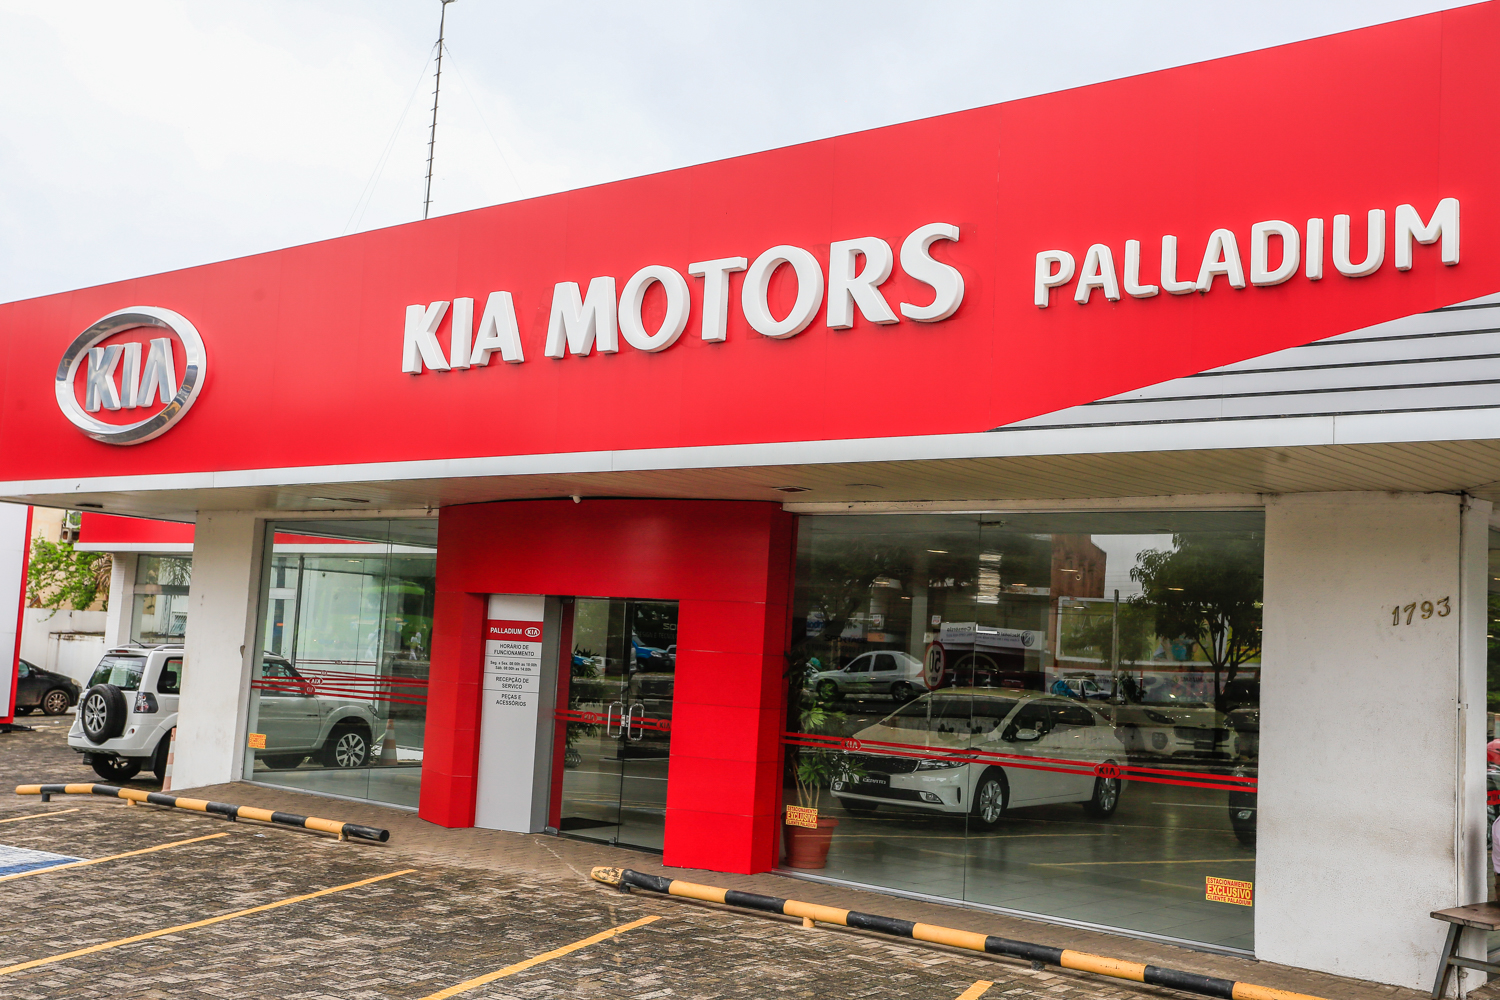 Kia Motors Paladium 